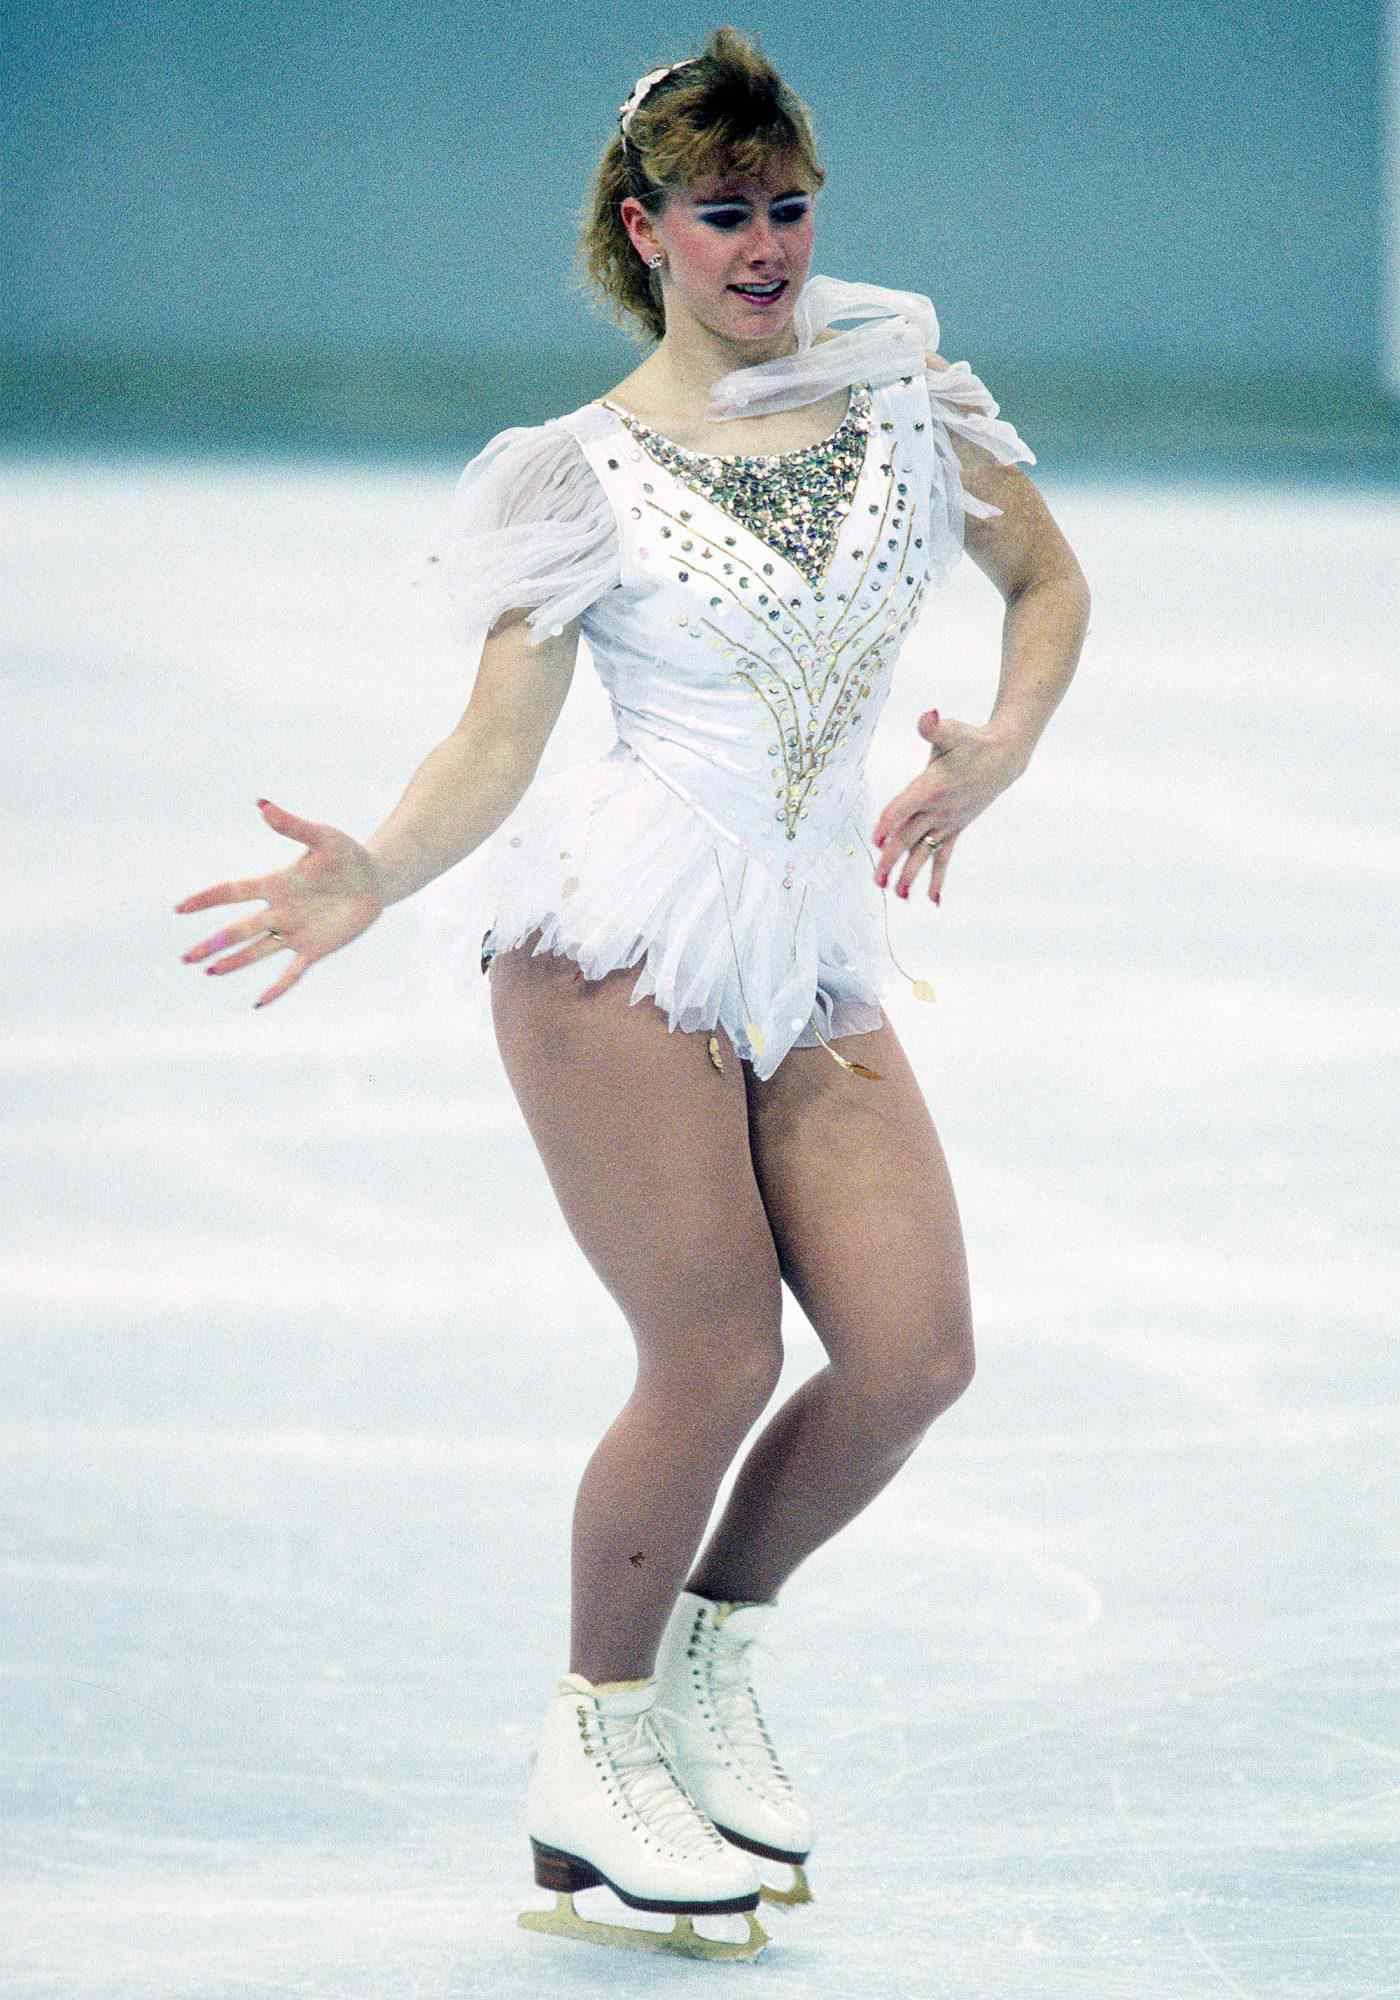 Tonya Harding Performing In The Ice-Skating